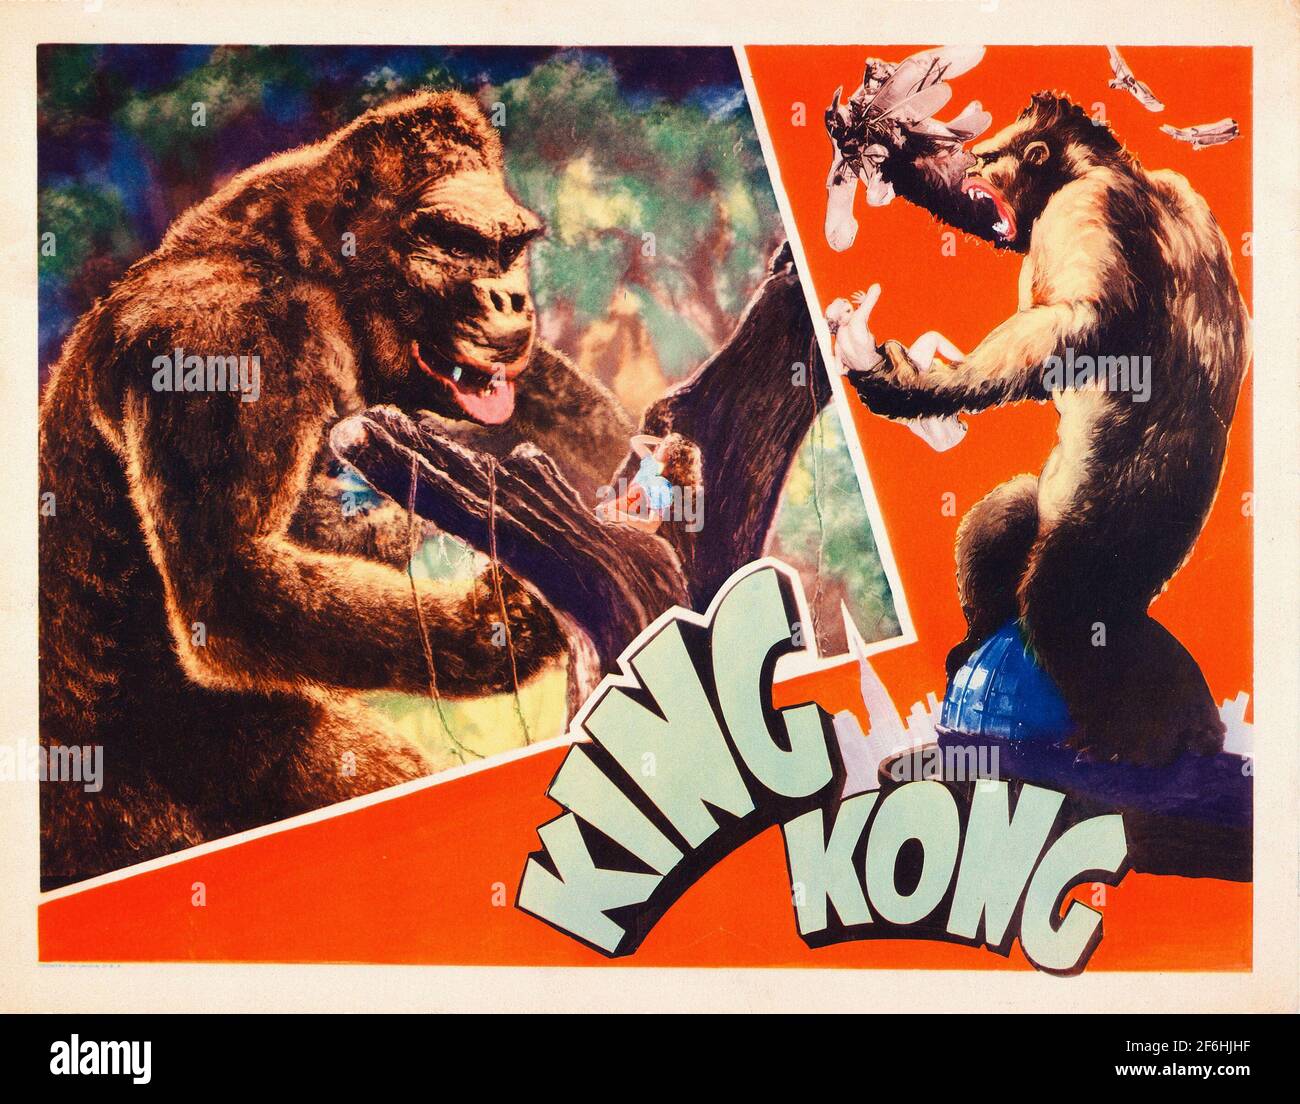 Lobby-Karte für den 1933 King Kong Film. Mit Fay Wray, Bruce Cabot, Robert Armstrong, Frank Reicher. Abenteuer / Fantasie / Action / Romantik. Stockfoto